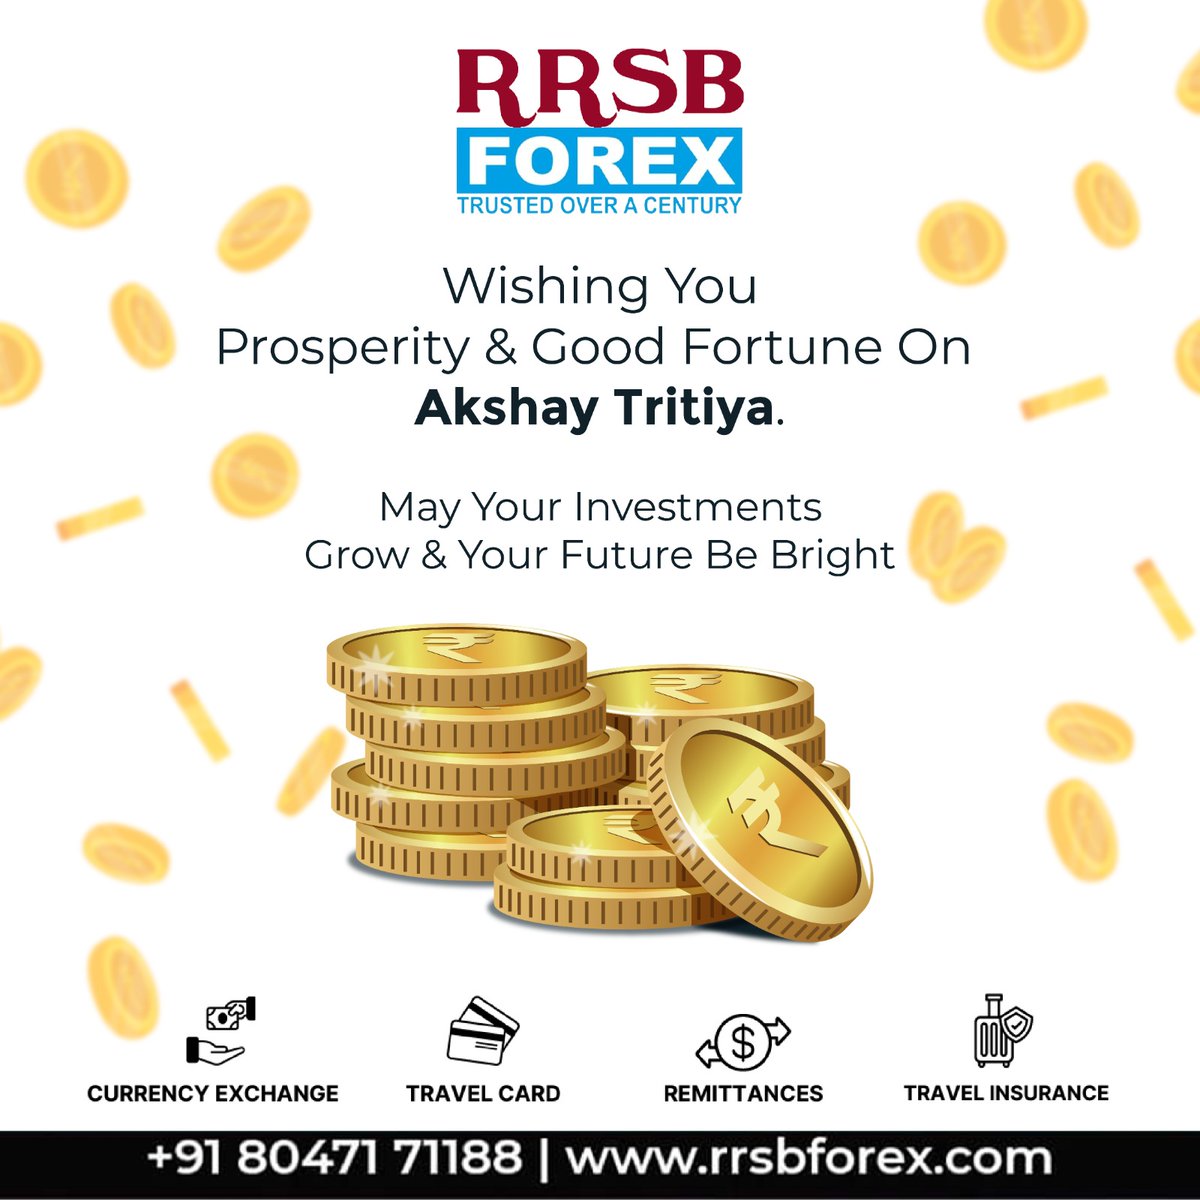 May your Akshay Tritiya be filled with wealth and prosperity! Here's to golden opportunities and successful exchanges. Happy Akshay Tritiya!

#rrsbforex #akshaytritiya #prosperity #goodwishestoall